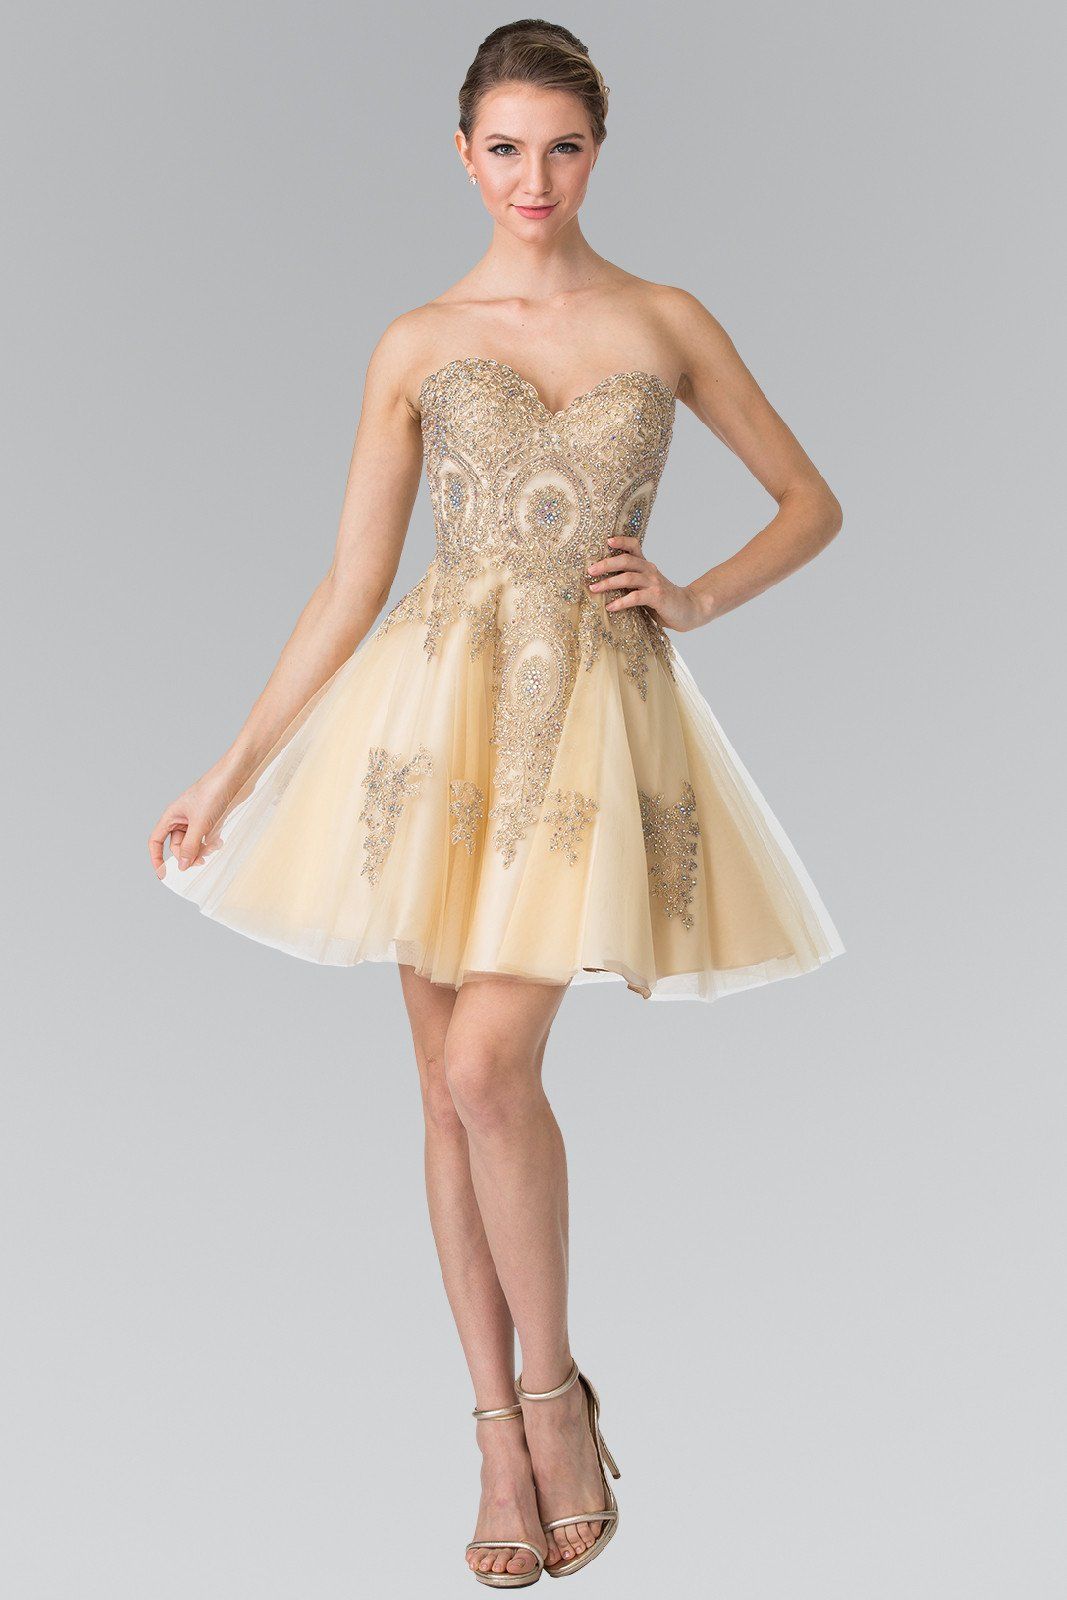 Short Strapless Dress with Gold Lace Applique by Elizabeth K GS2371 ...